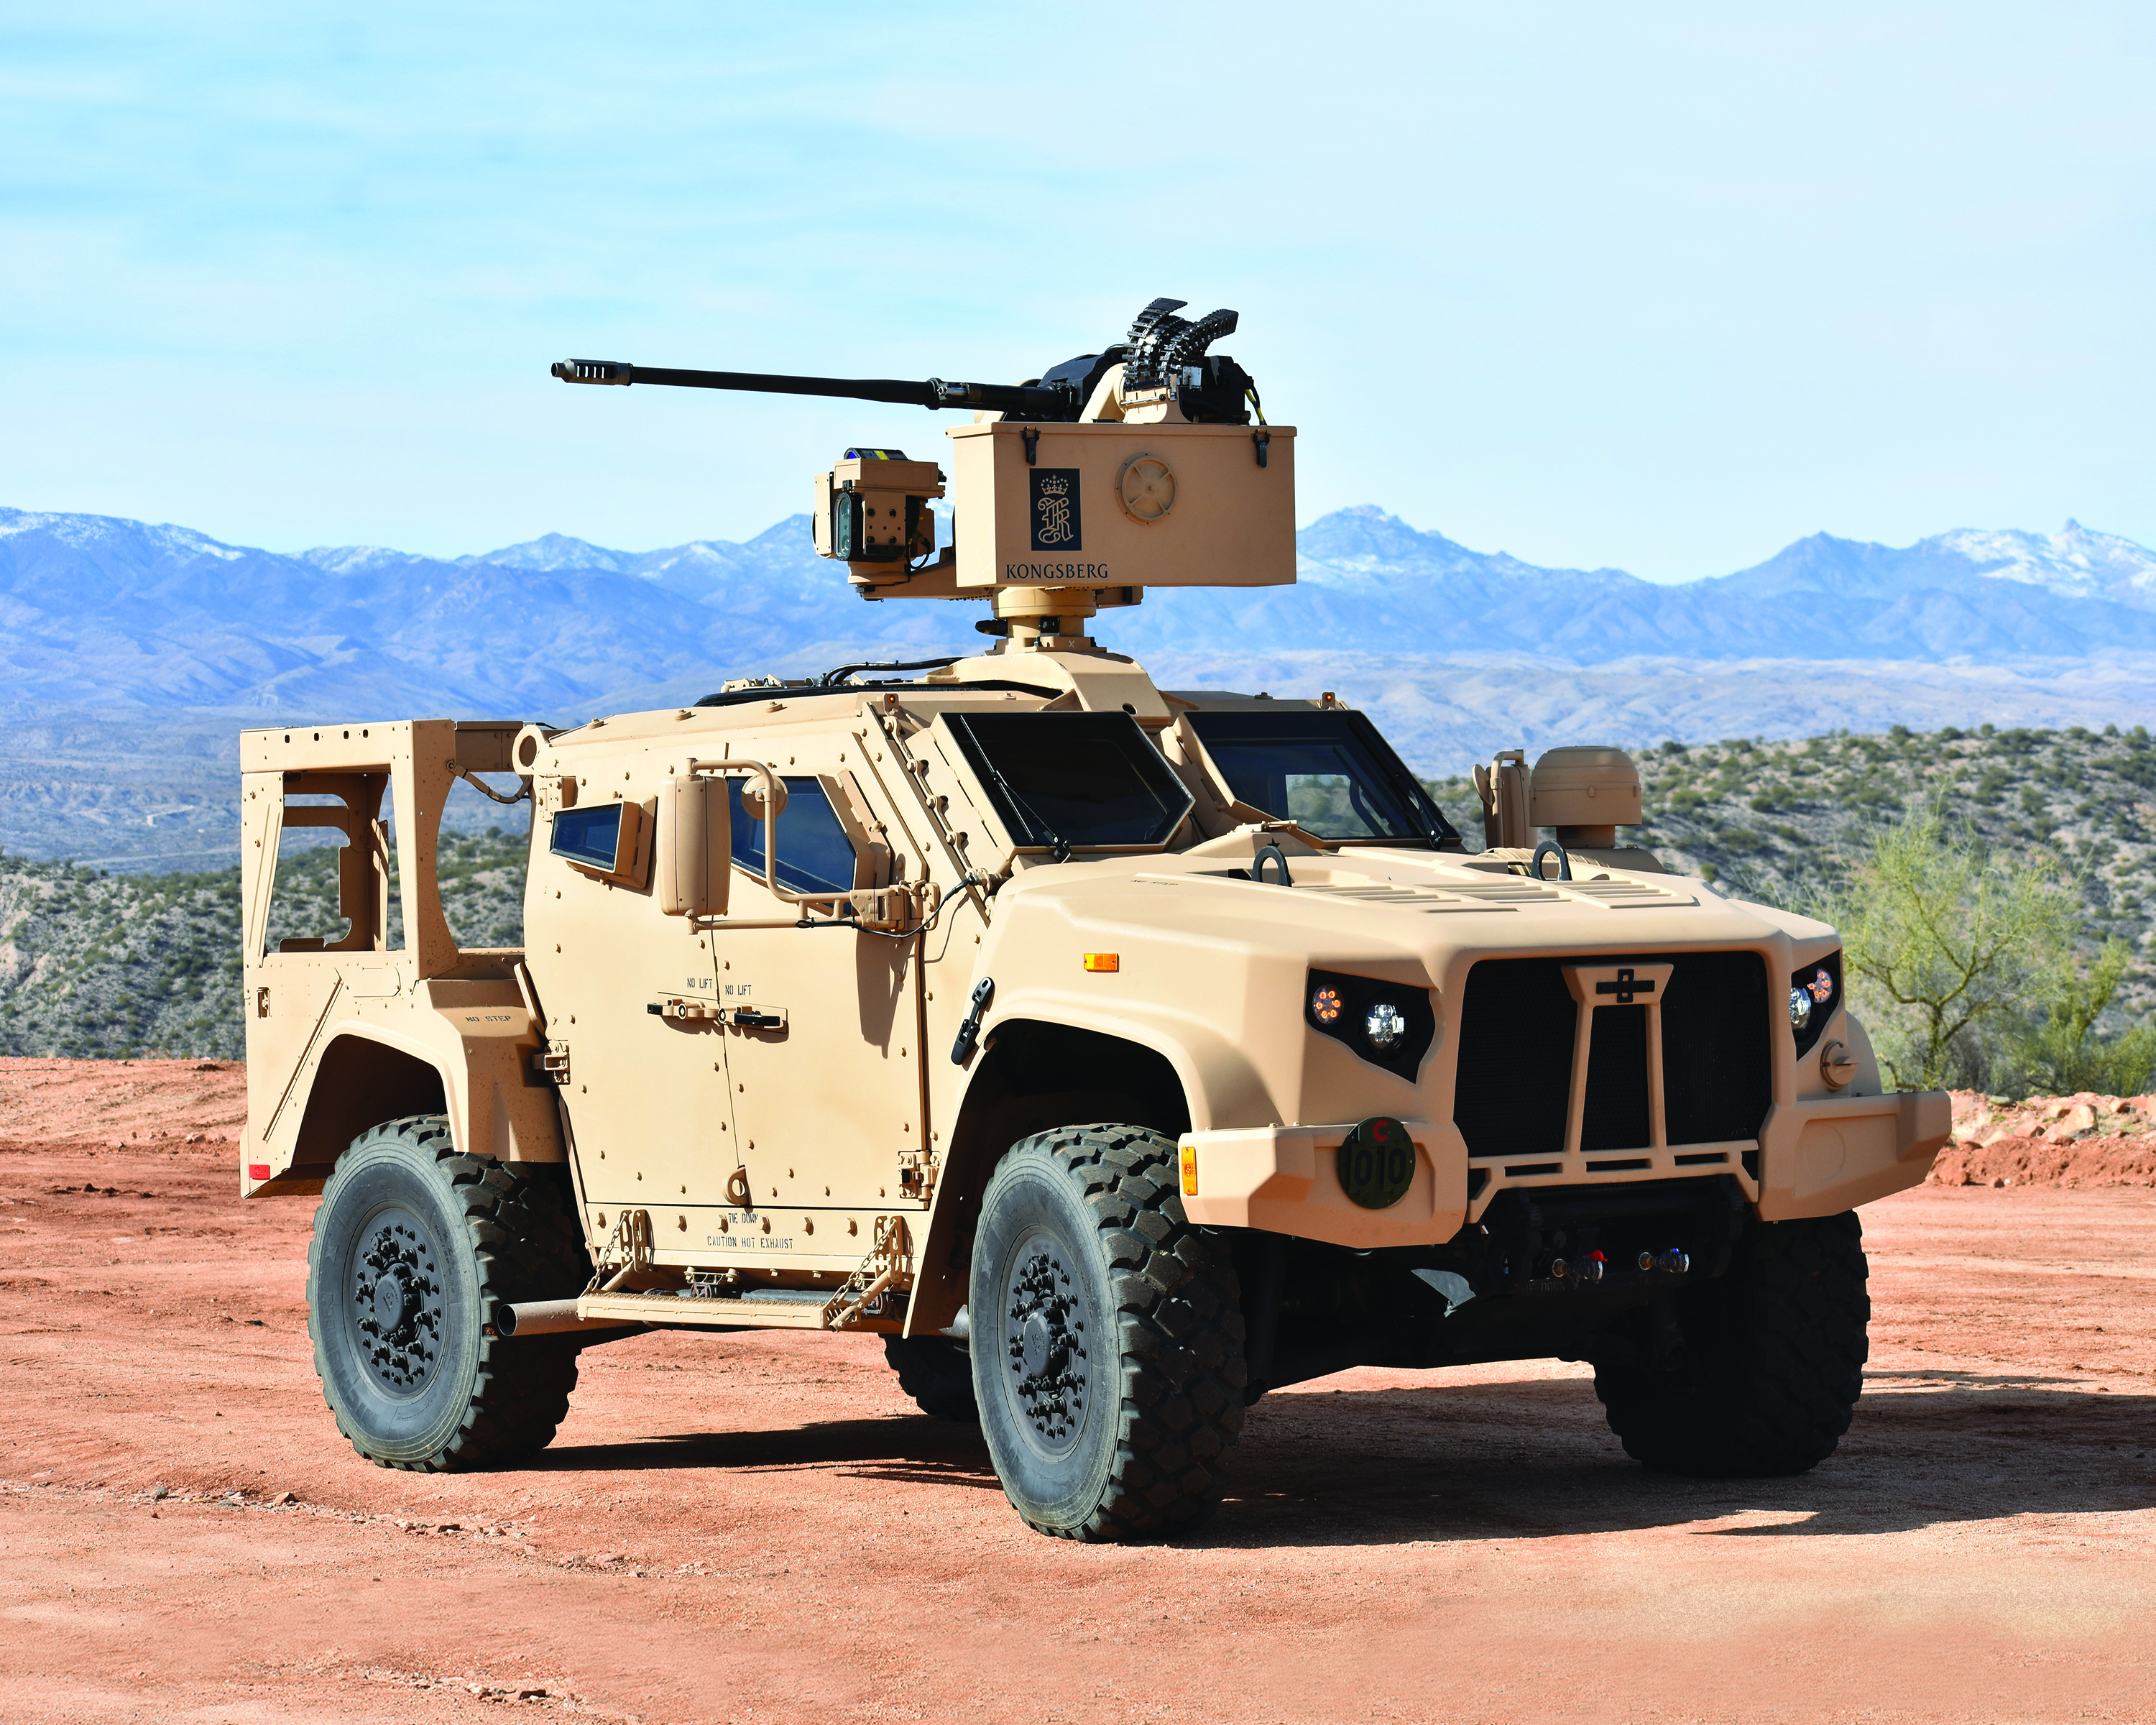 Oshkosh Defense JLTV (Joint Light Tactical Vehicle) by Oshkosh Defense